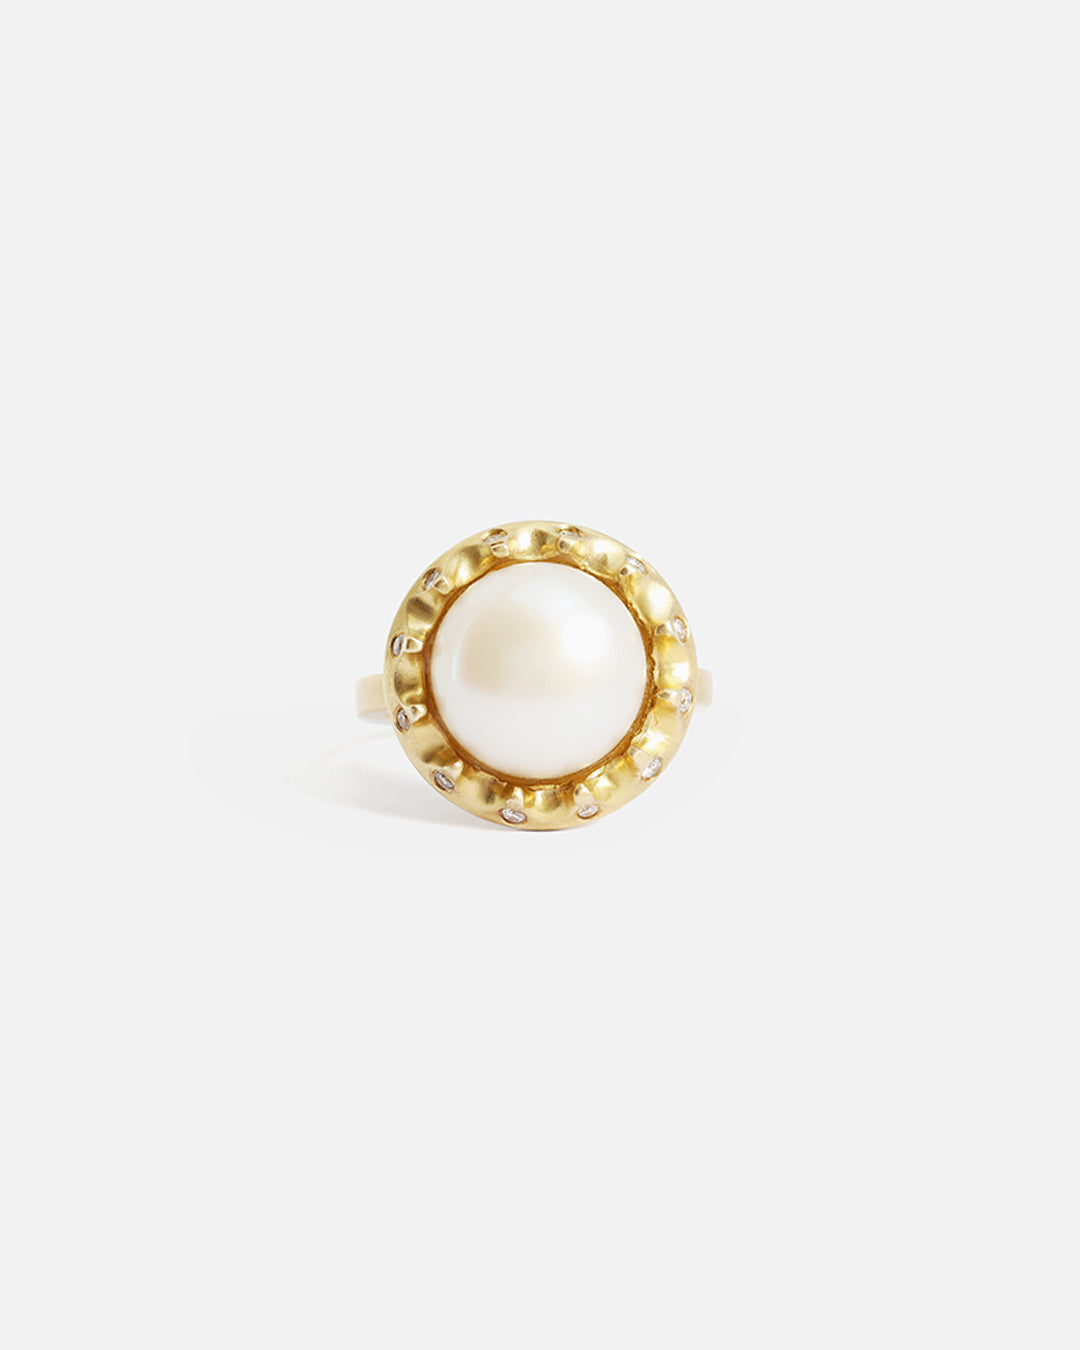 Pearl & Diamond / Ring By Tricia Kirkland